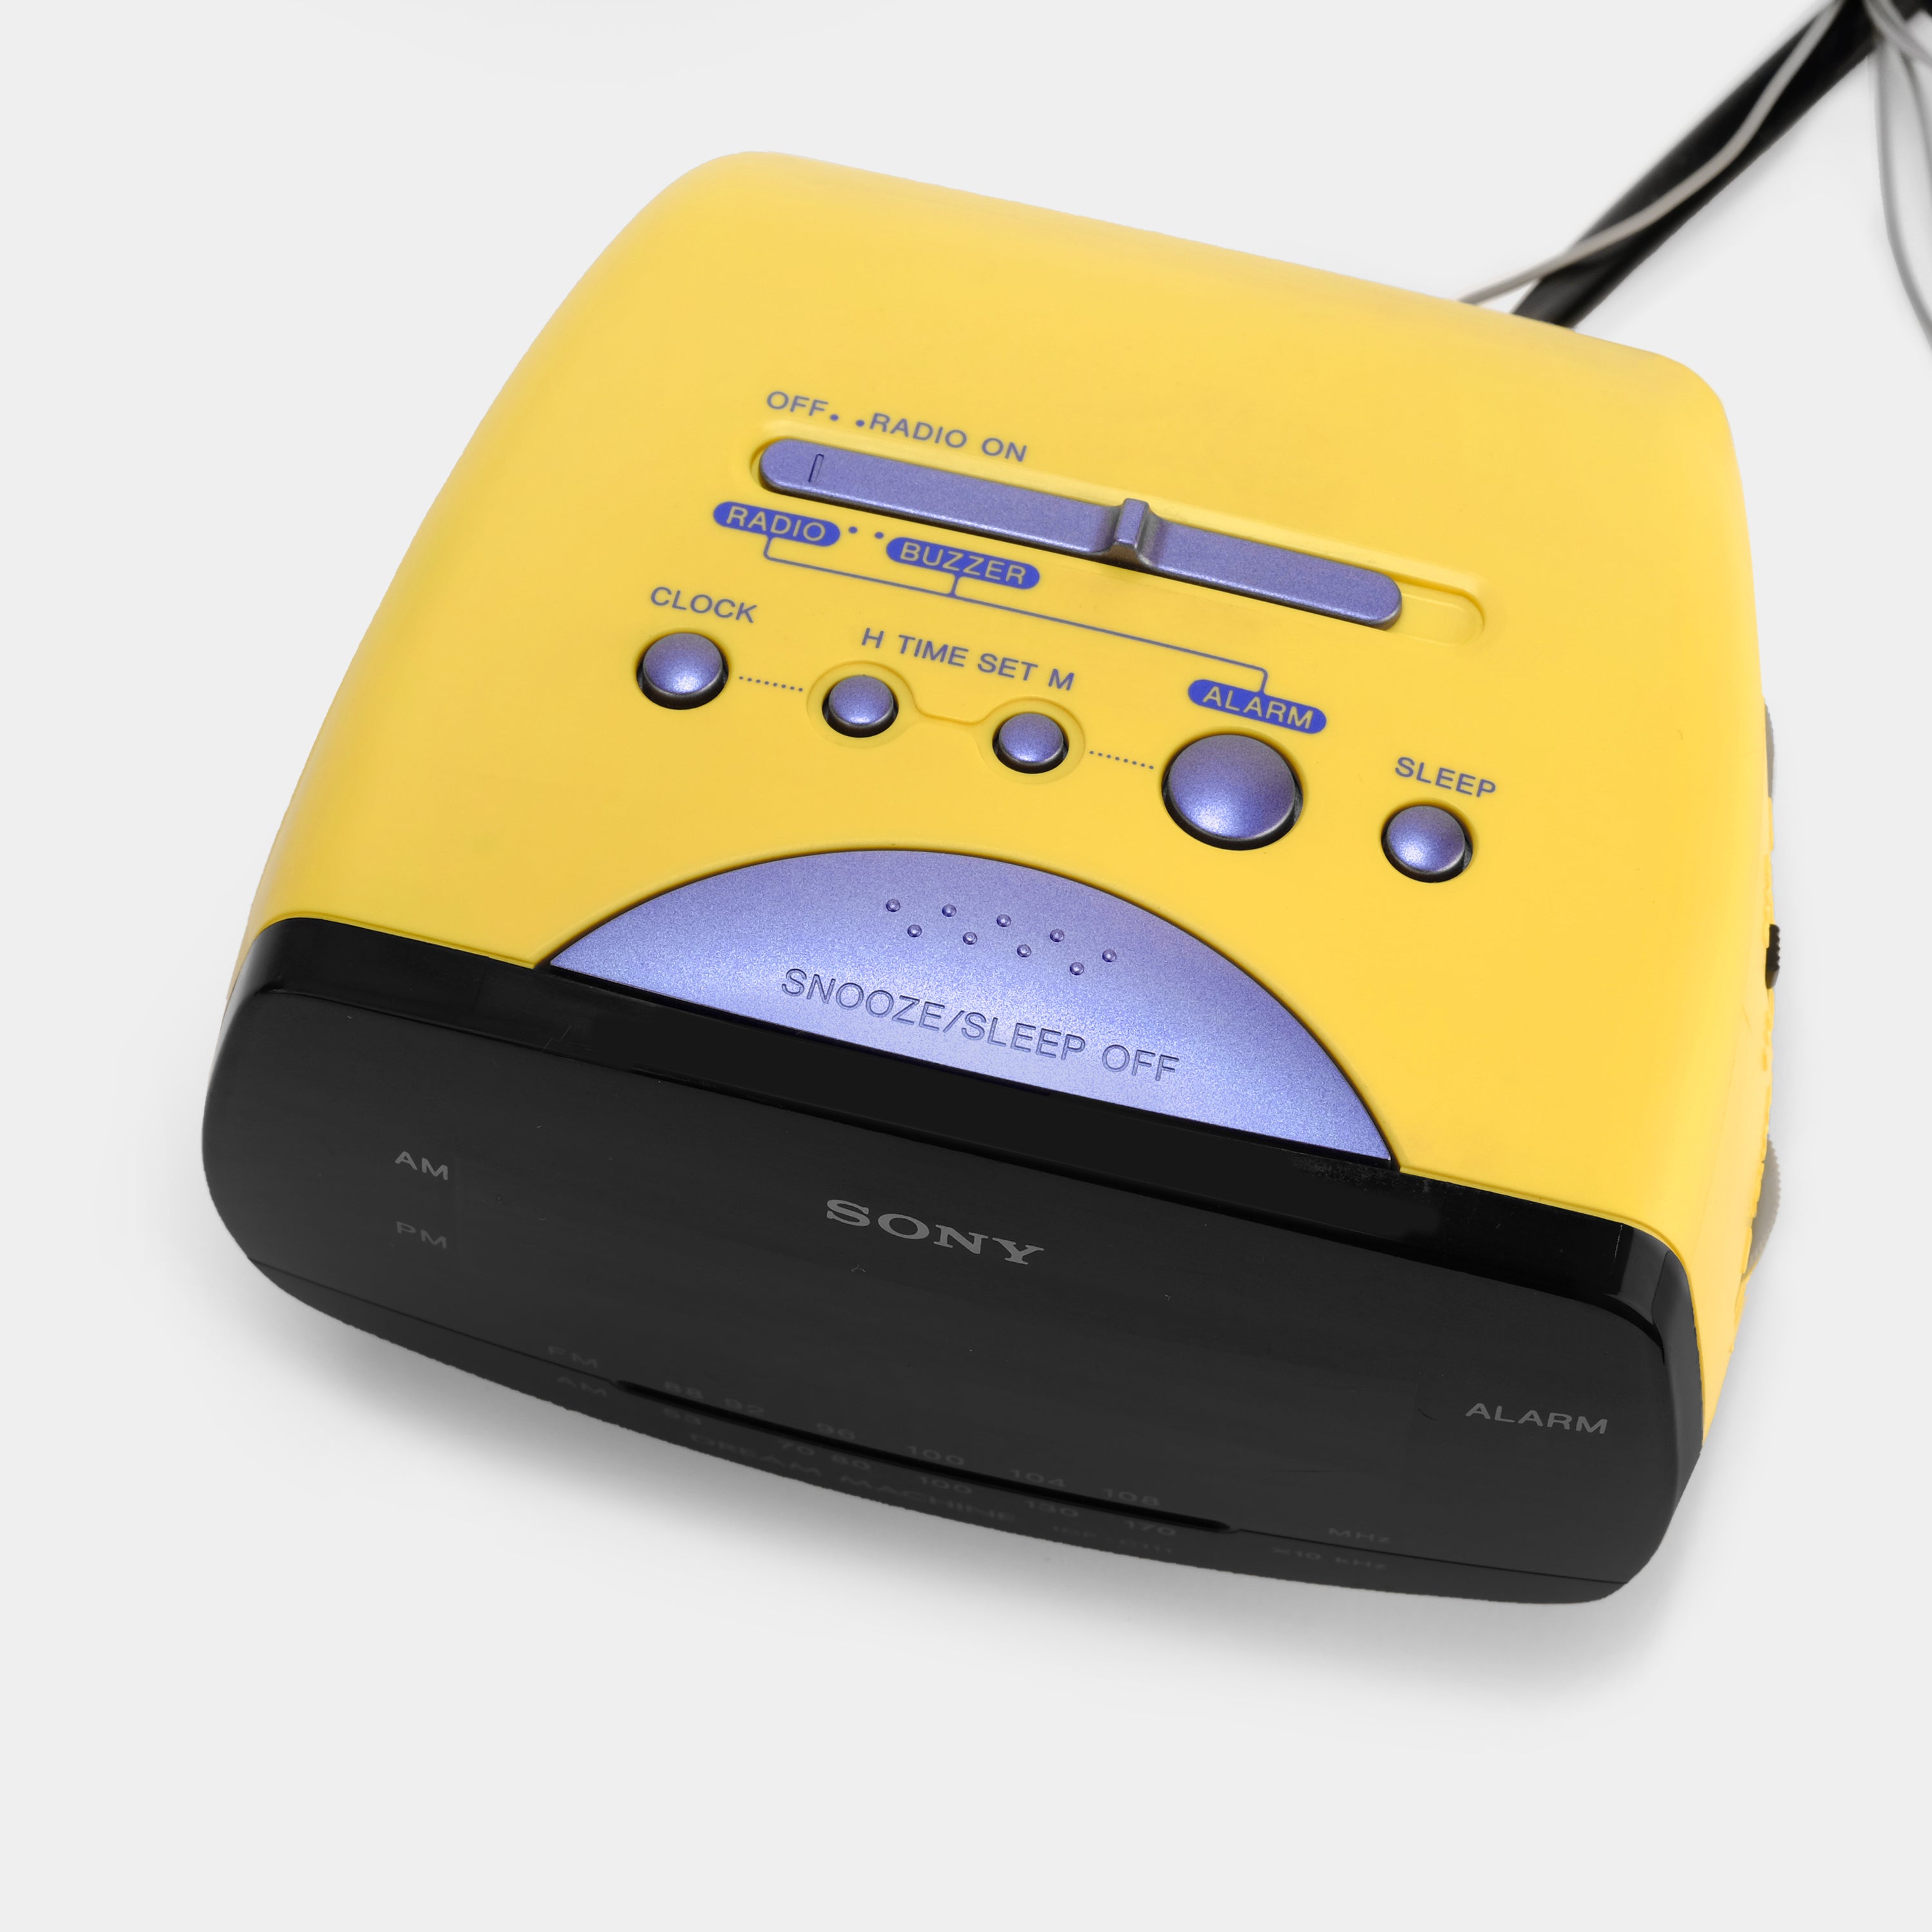 Sony ICF-C111 Dream Machine AM/FM Alarm Clock Radio